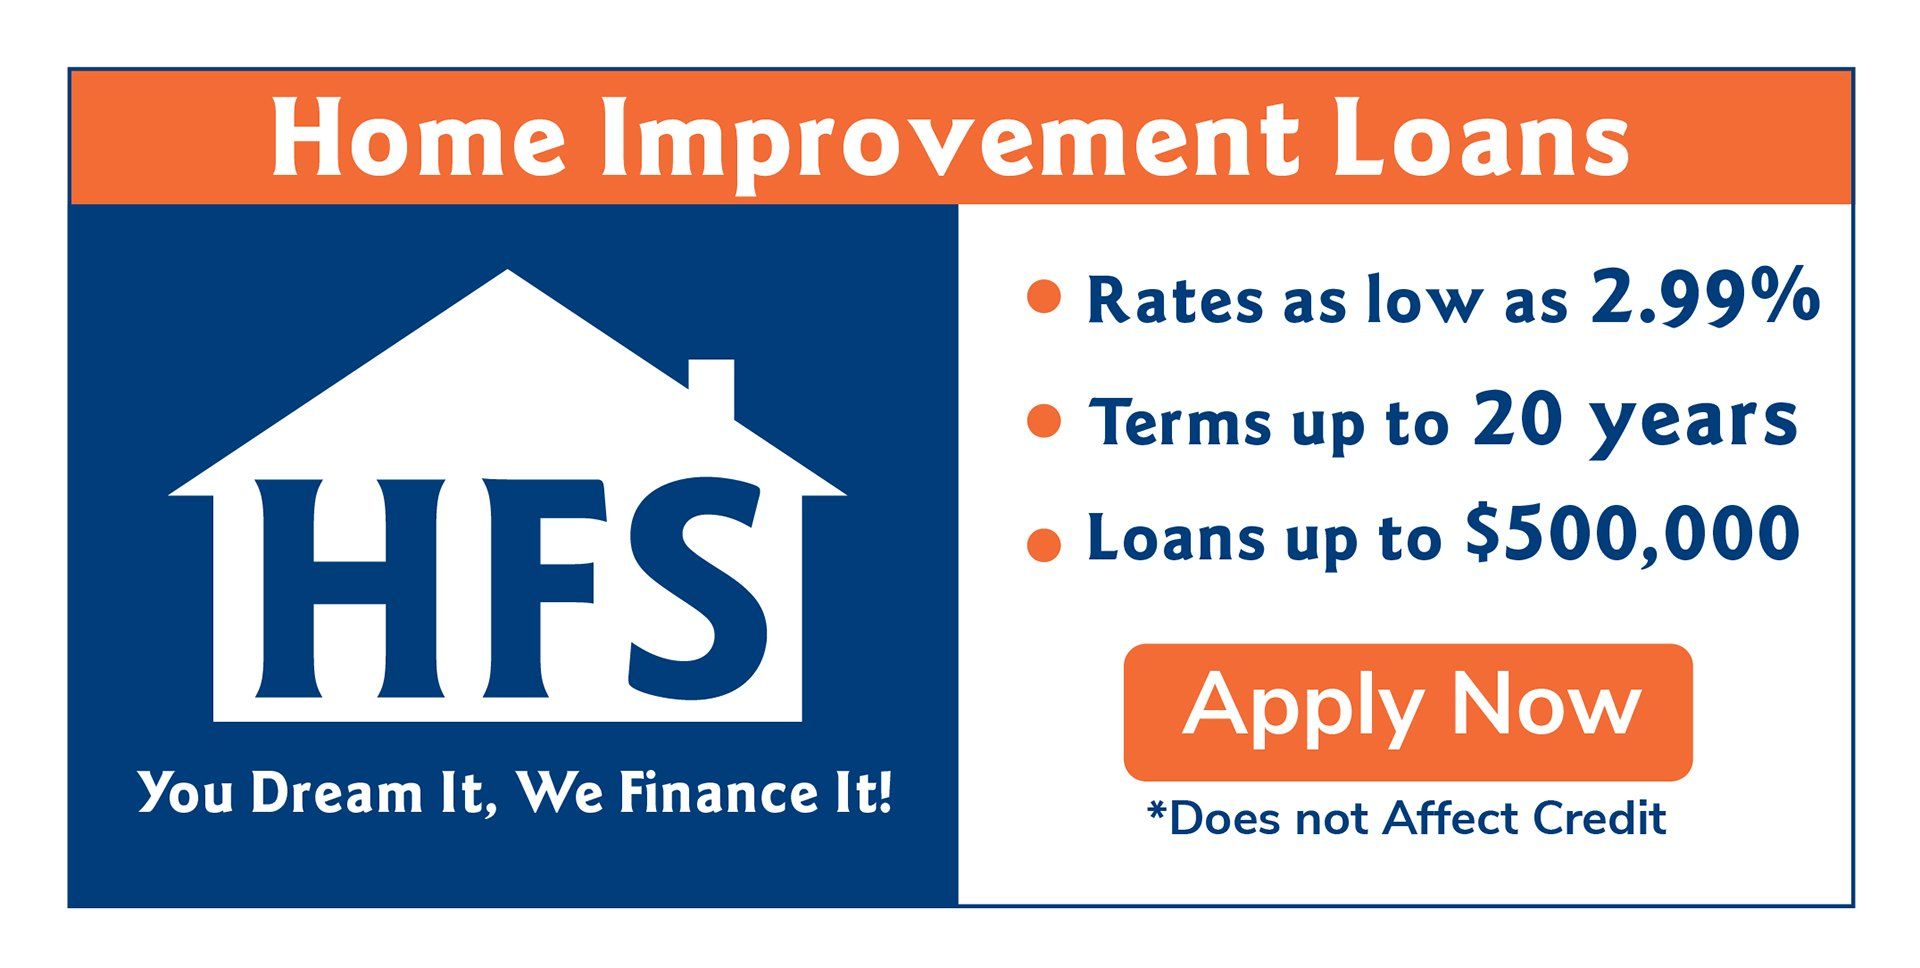 Home Improvement Loans Application Button